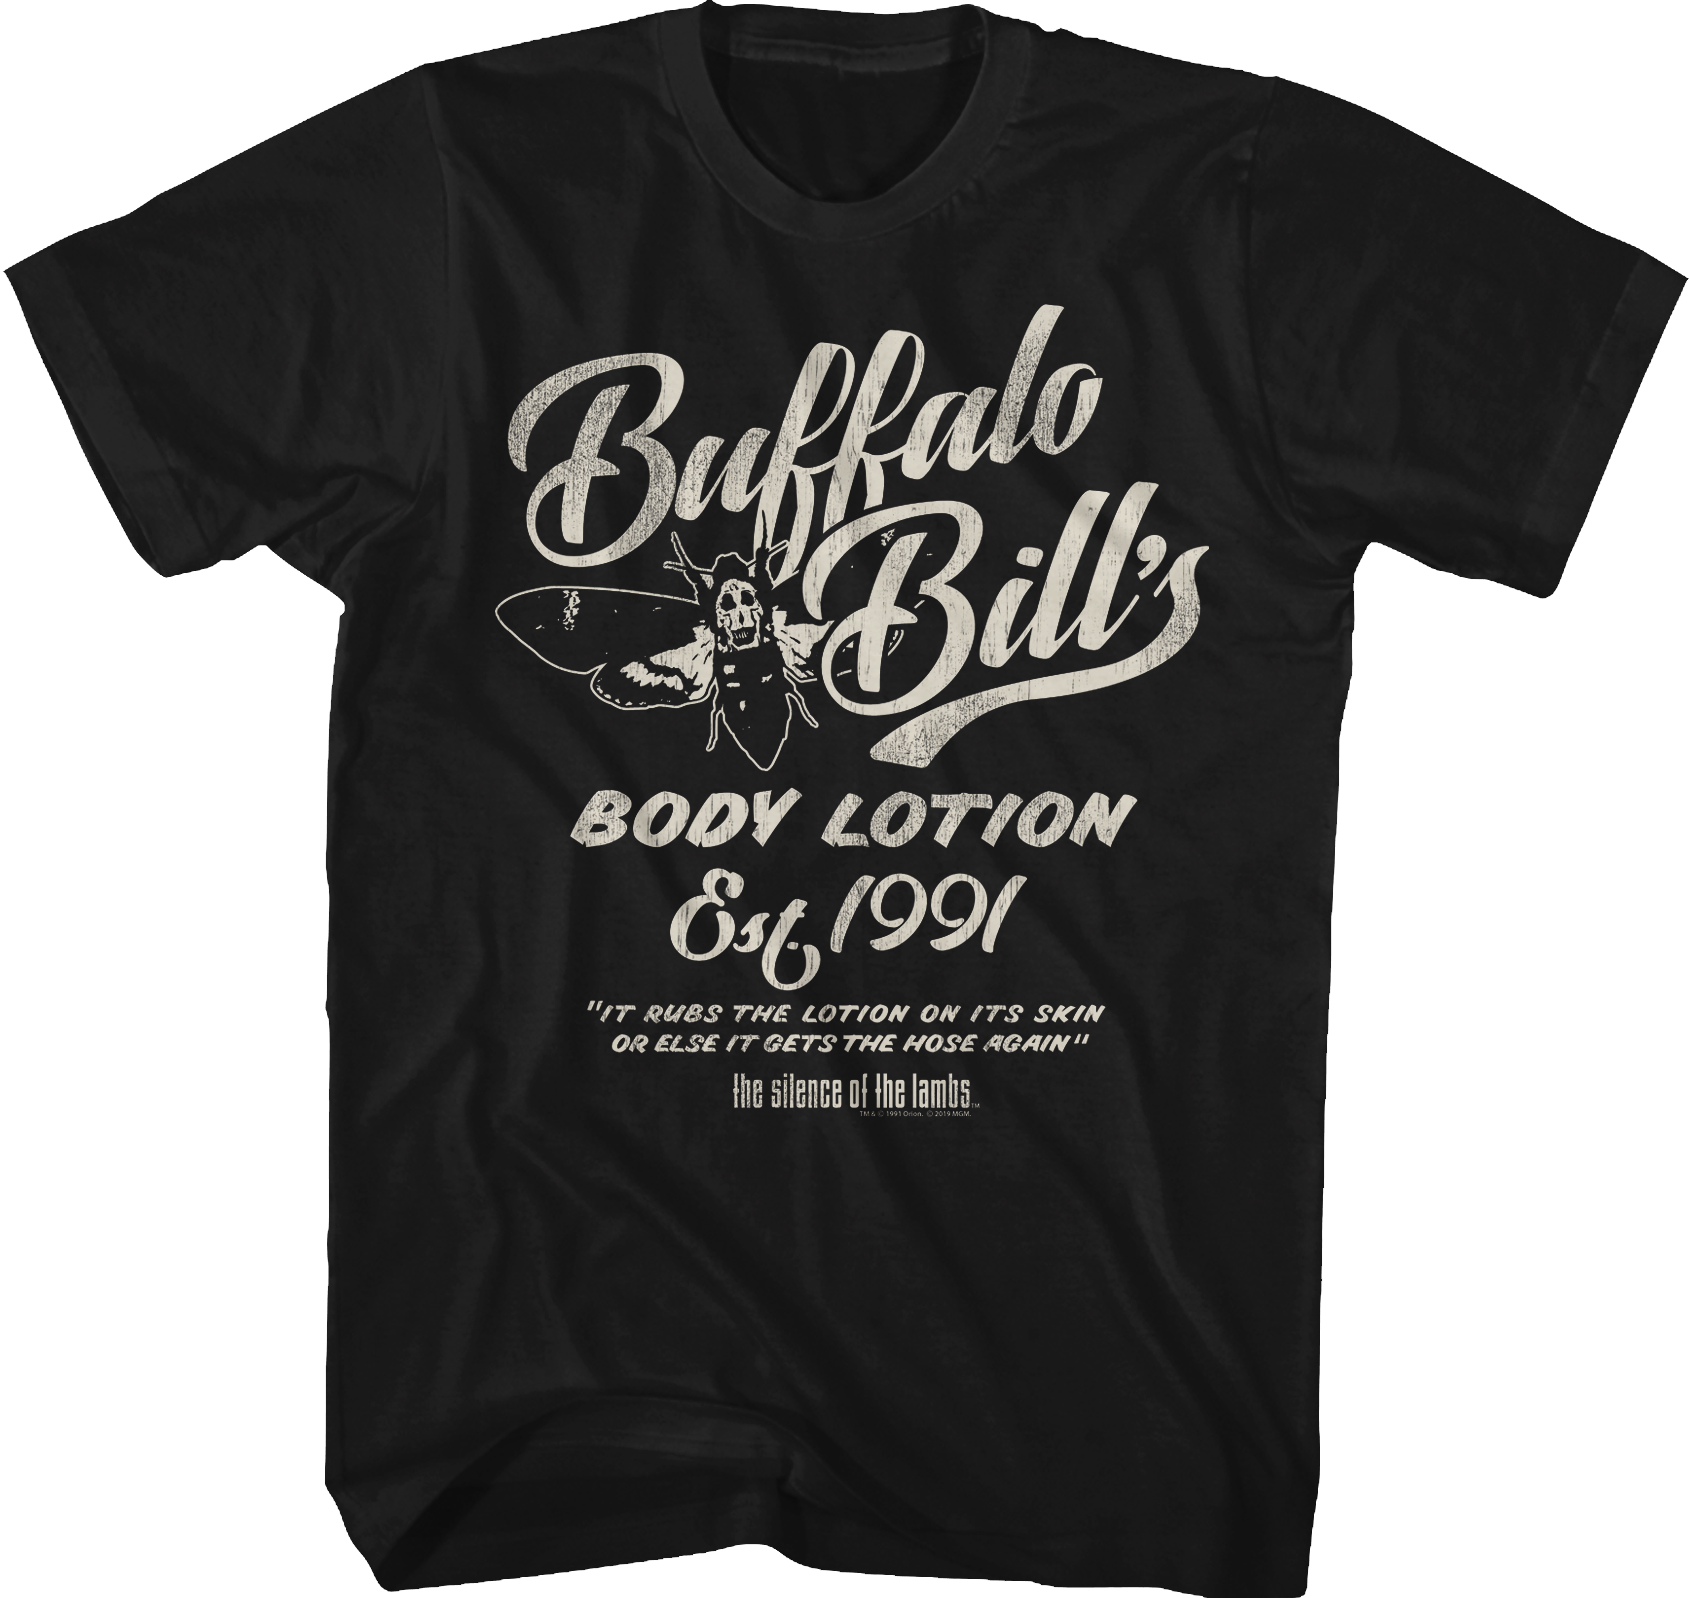 white buffalo bills shirt